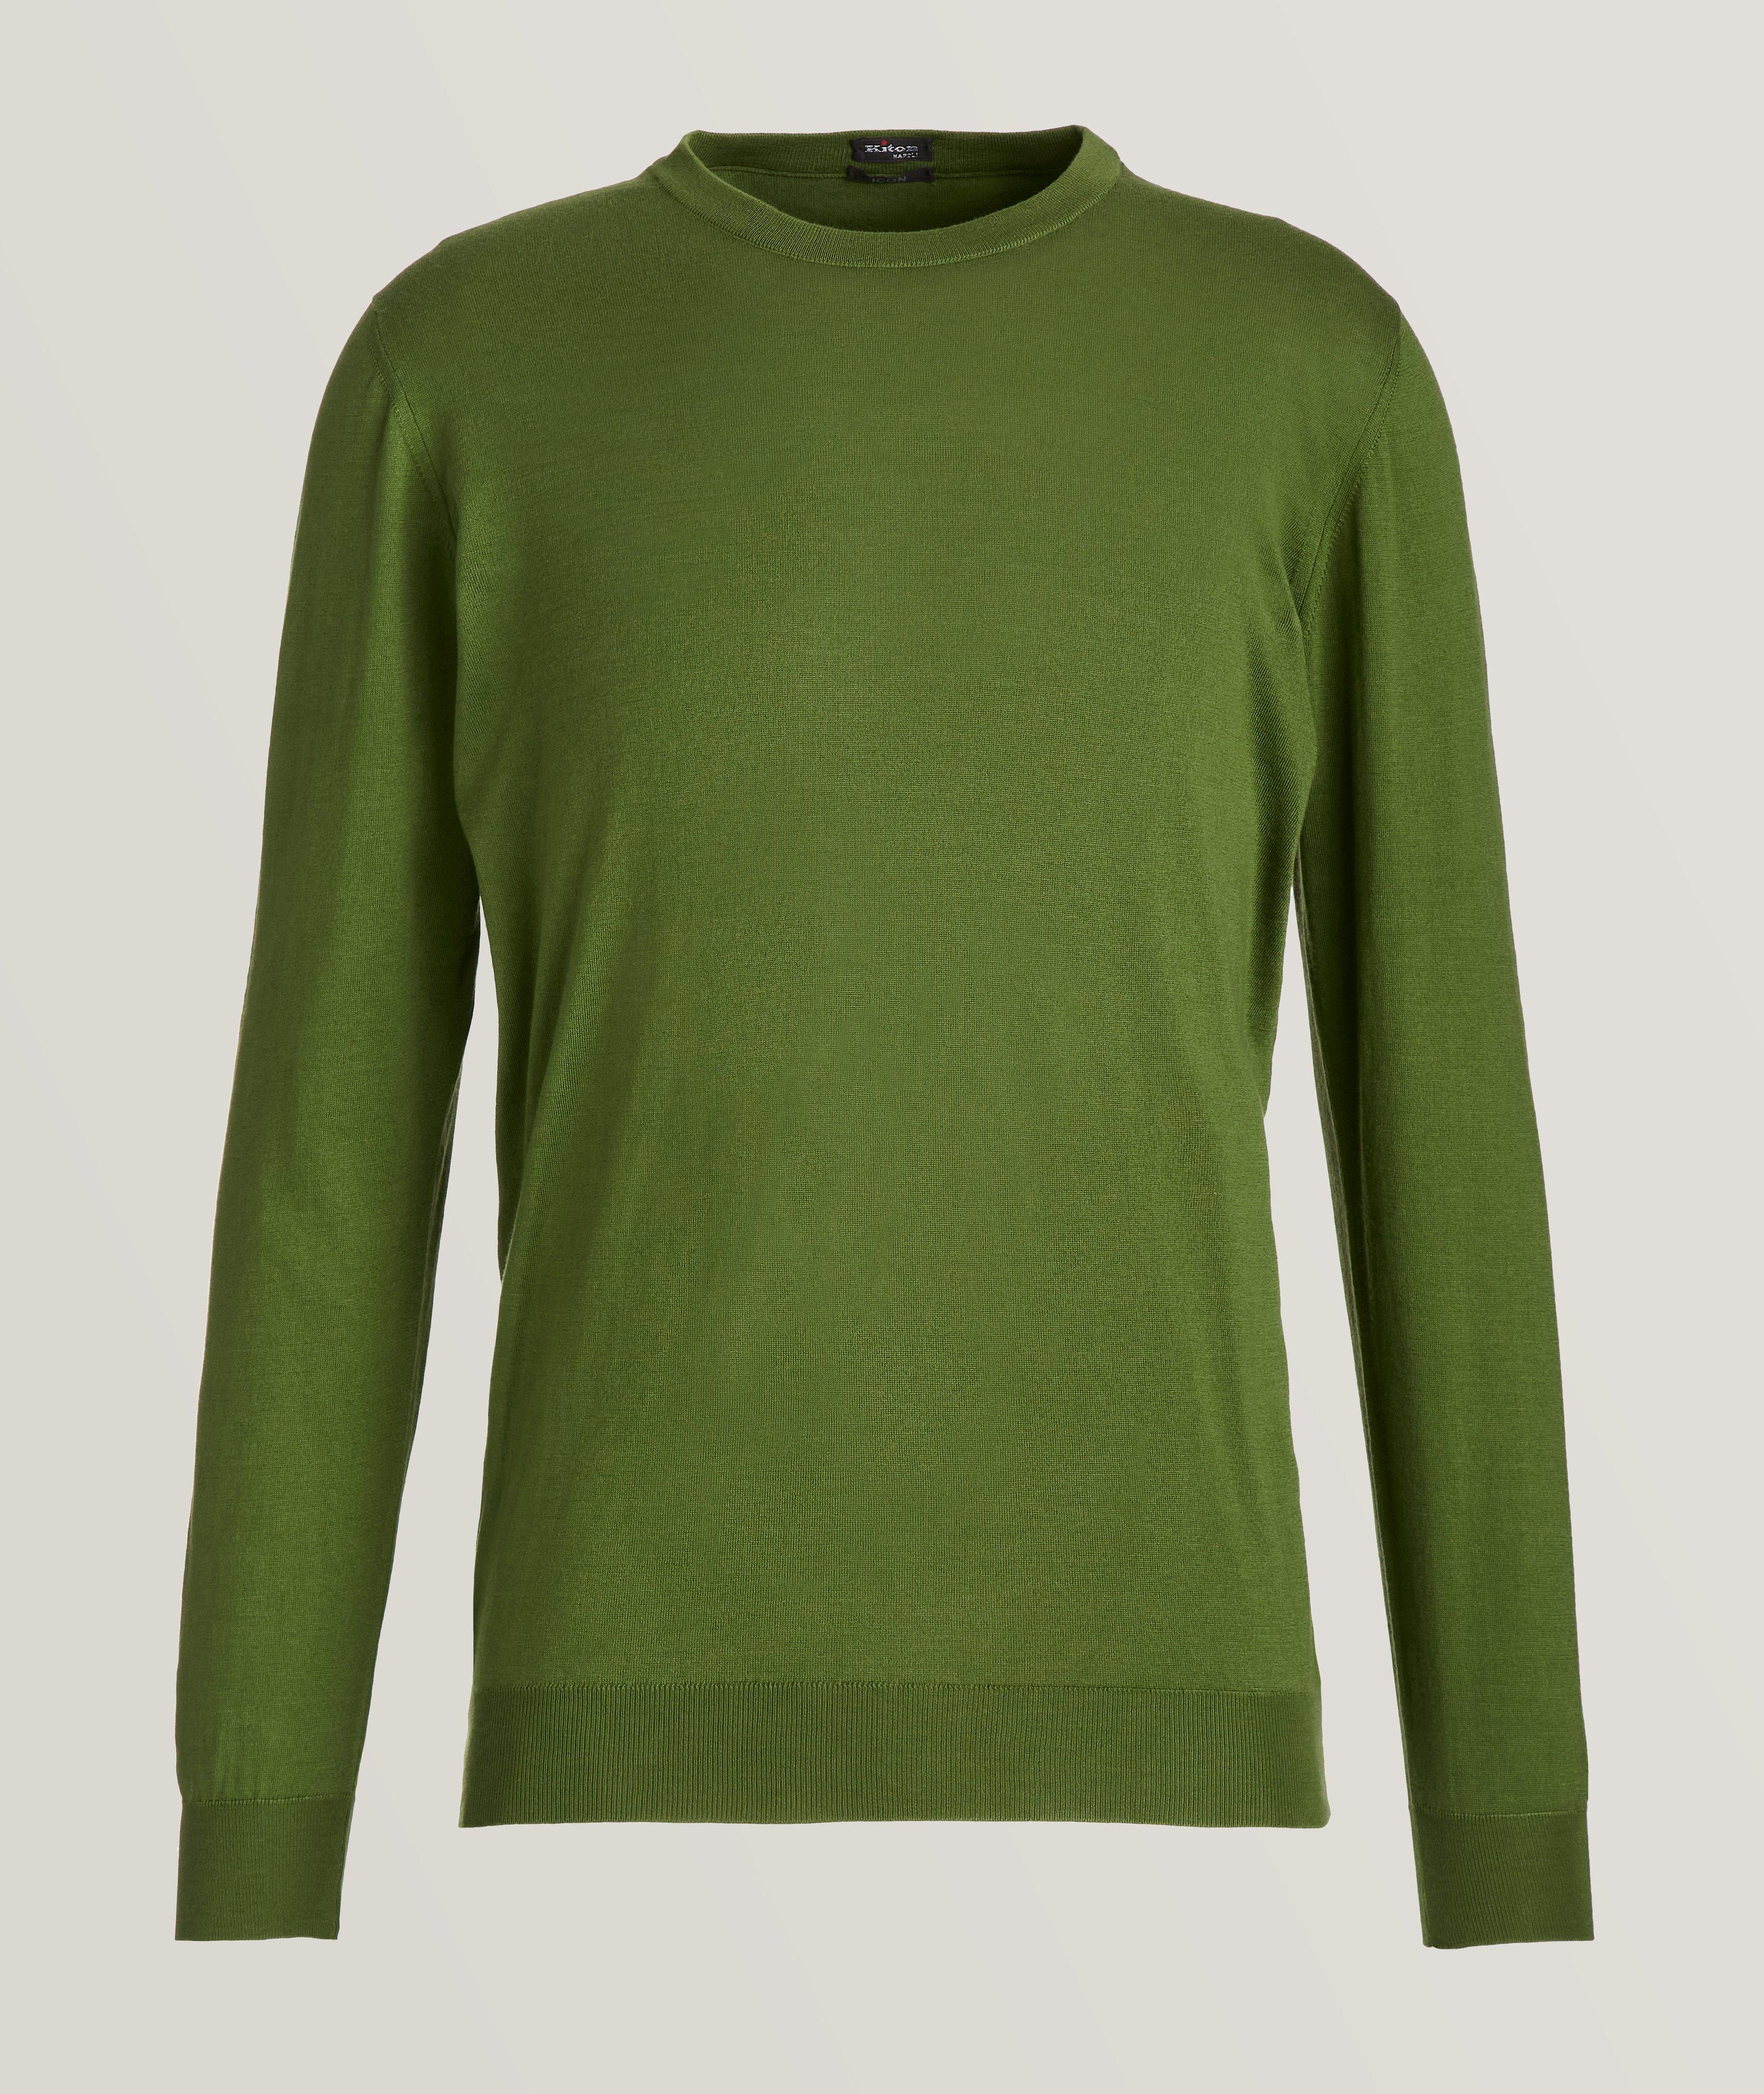 Long-Sleeve Cotton Crewneck Sweater image 0